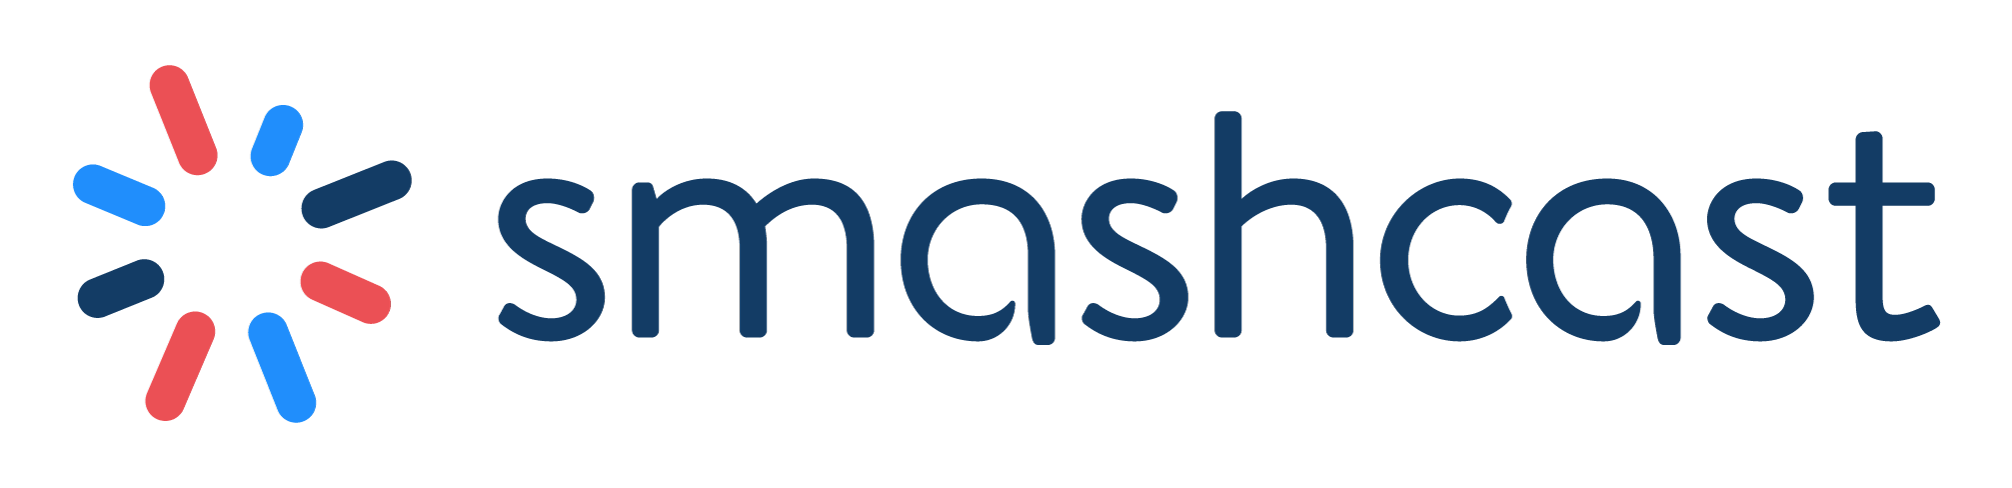 Smashcast Logo - Hitbox and Azubu to Relaunch as Smashcast Emerging as the World's